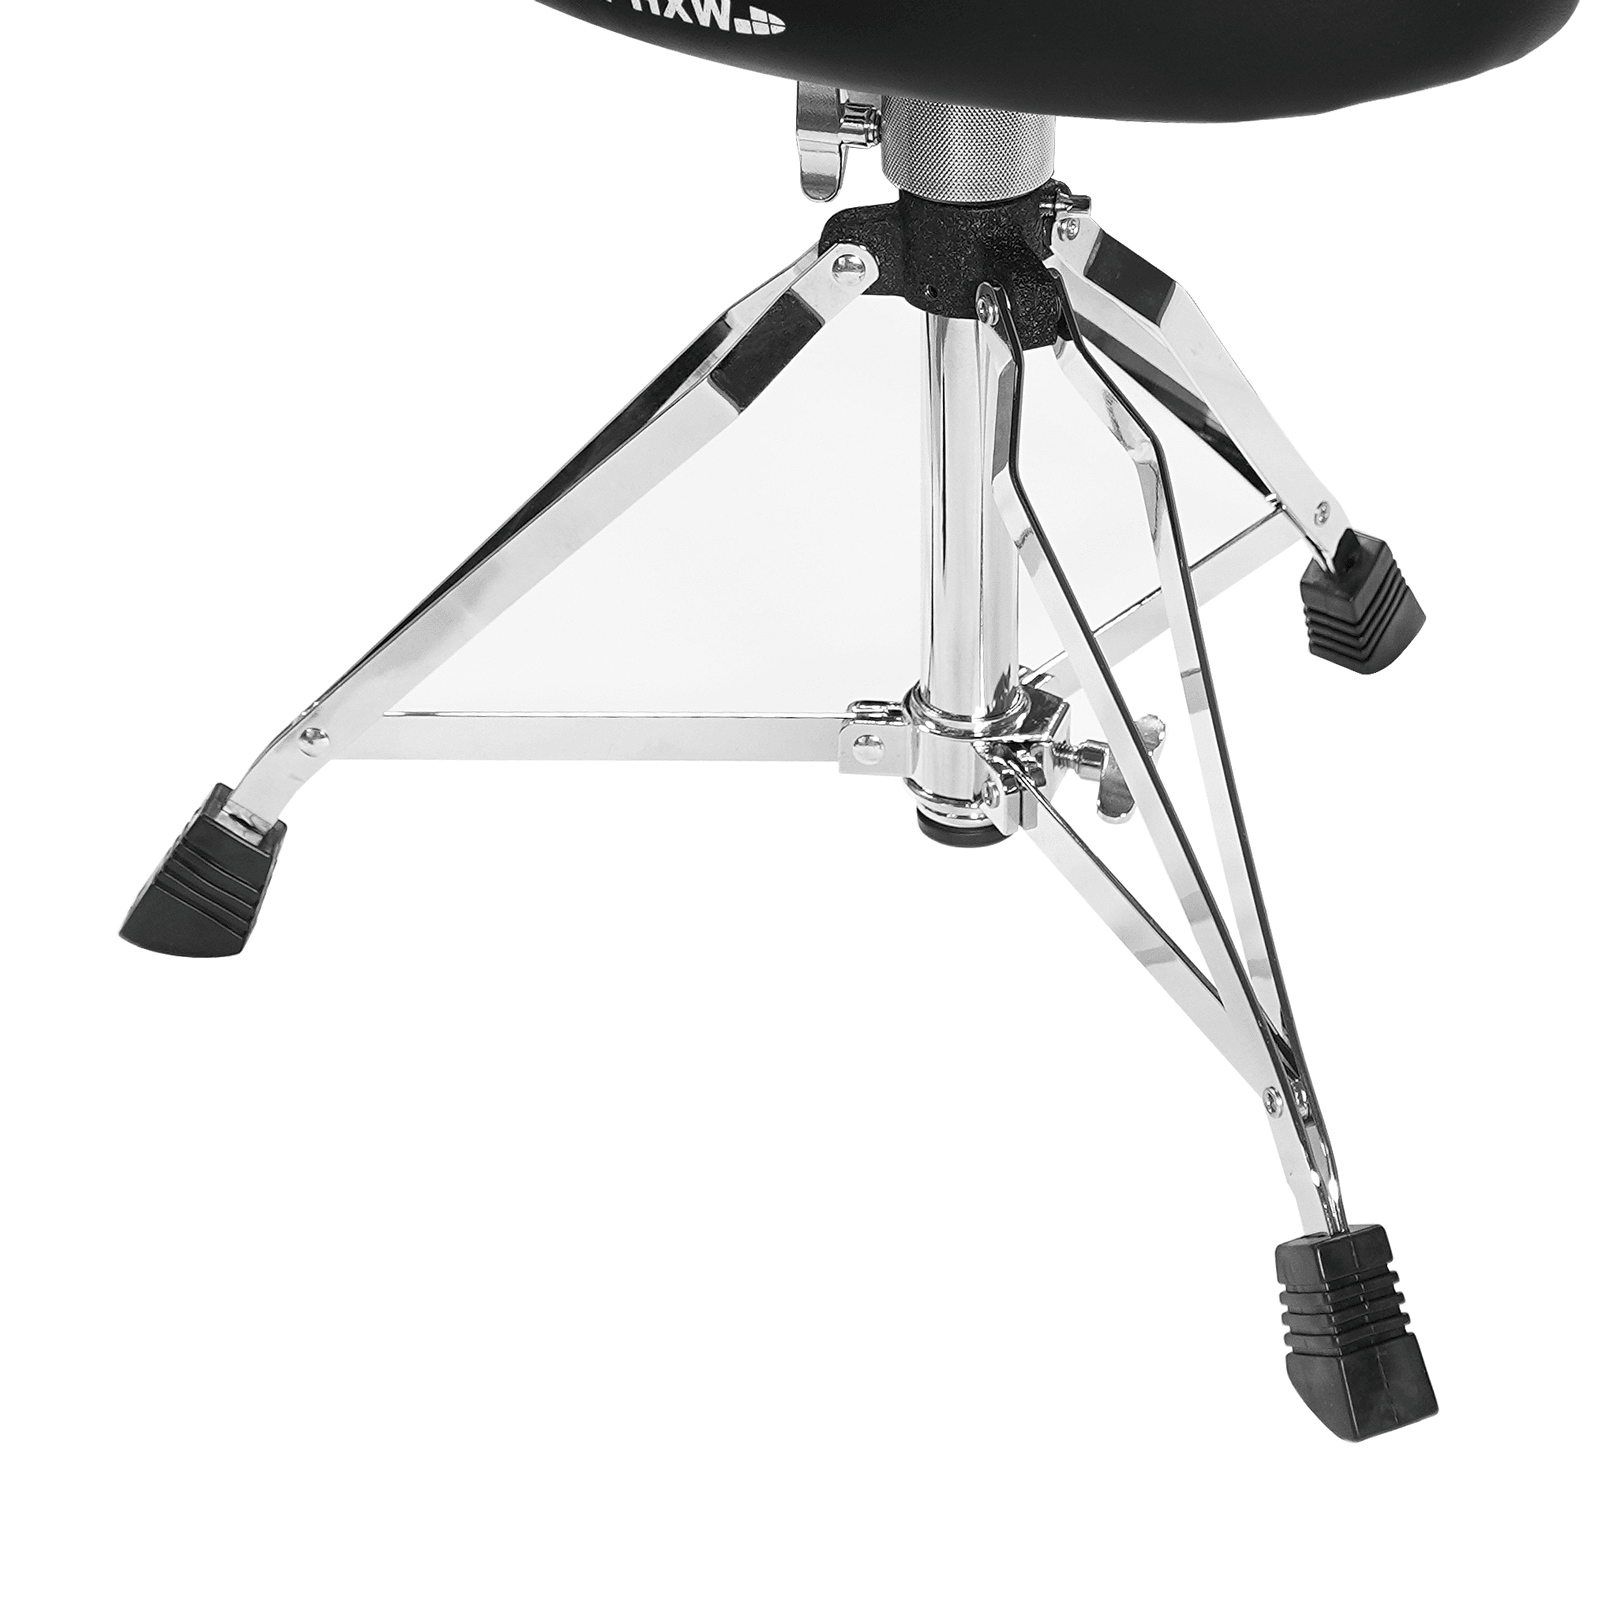 Avatar SD301 Series Drum Throne Saddle Type | AVATAR , Zoso Music